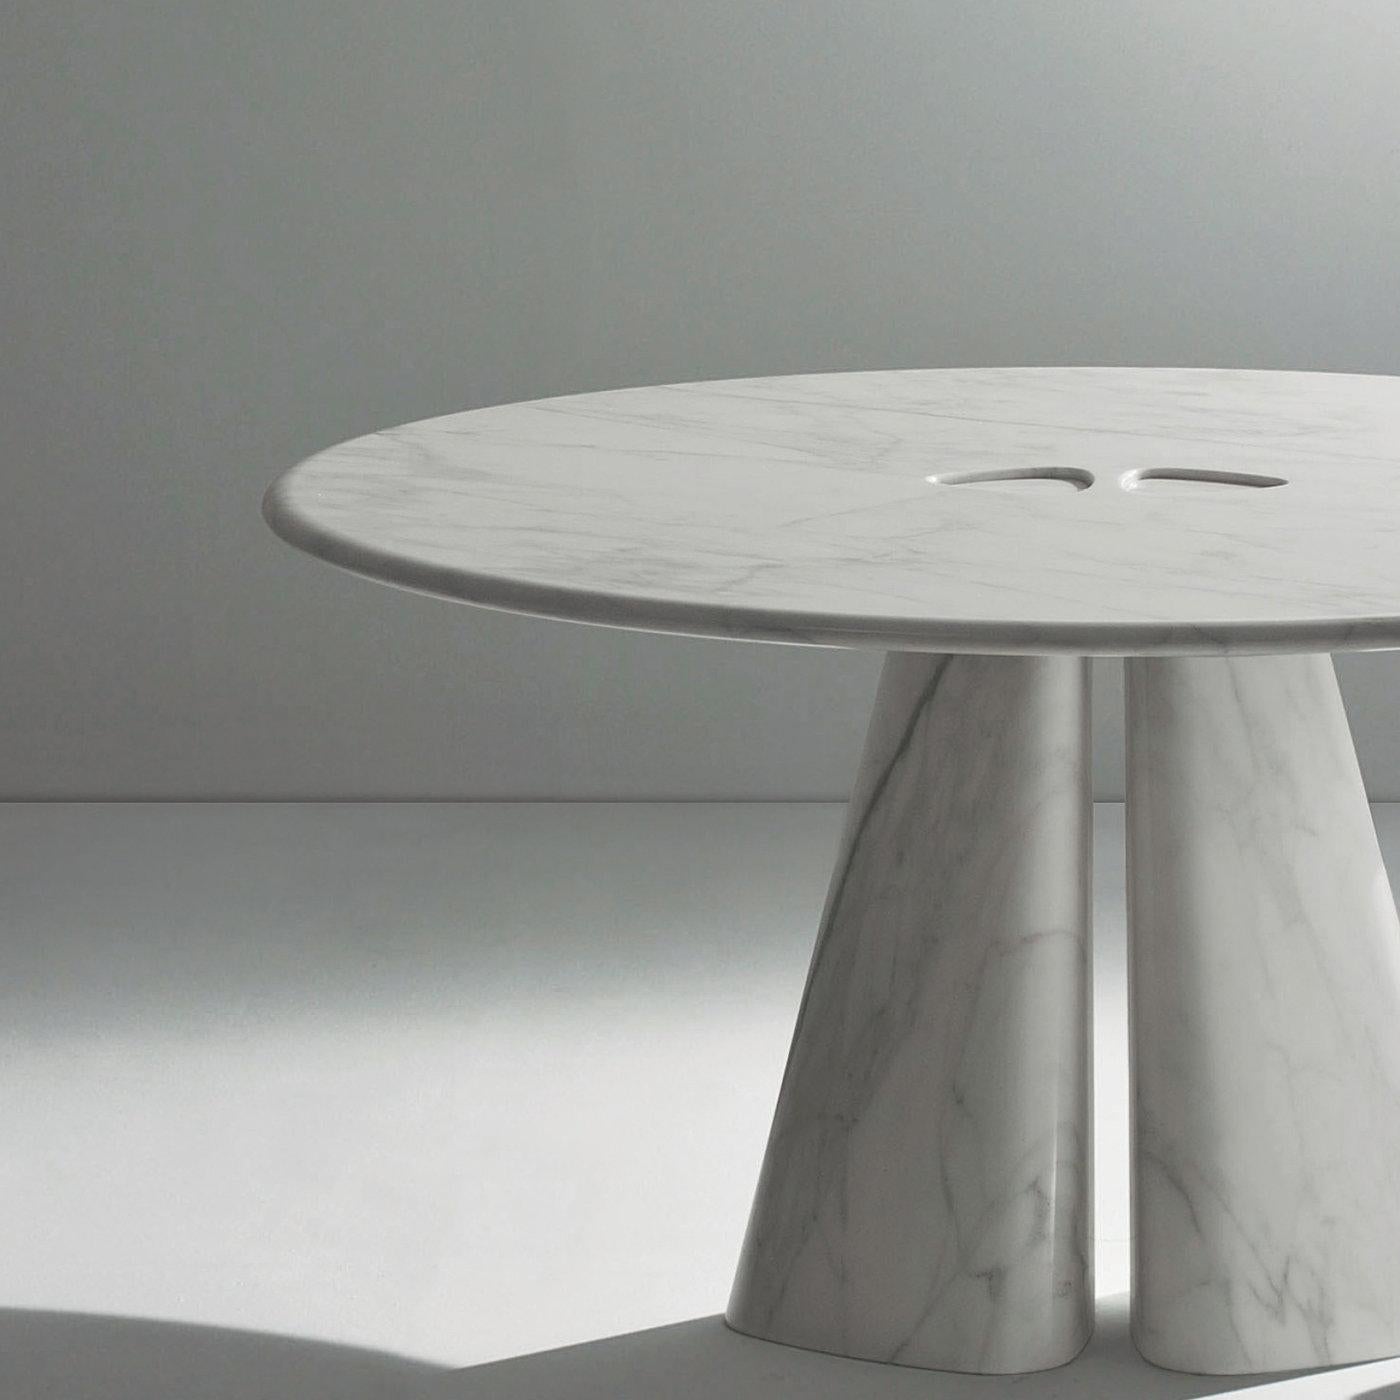 Italian Raja Round Table by Bartoli Design